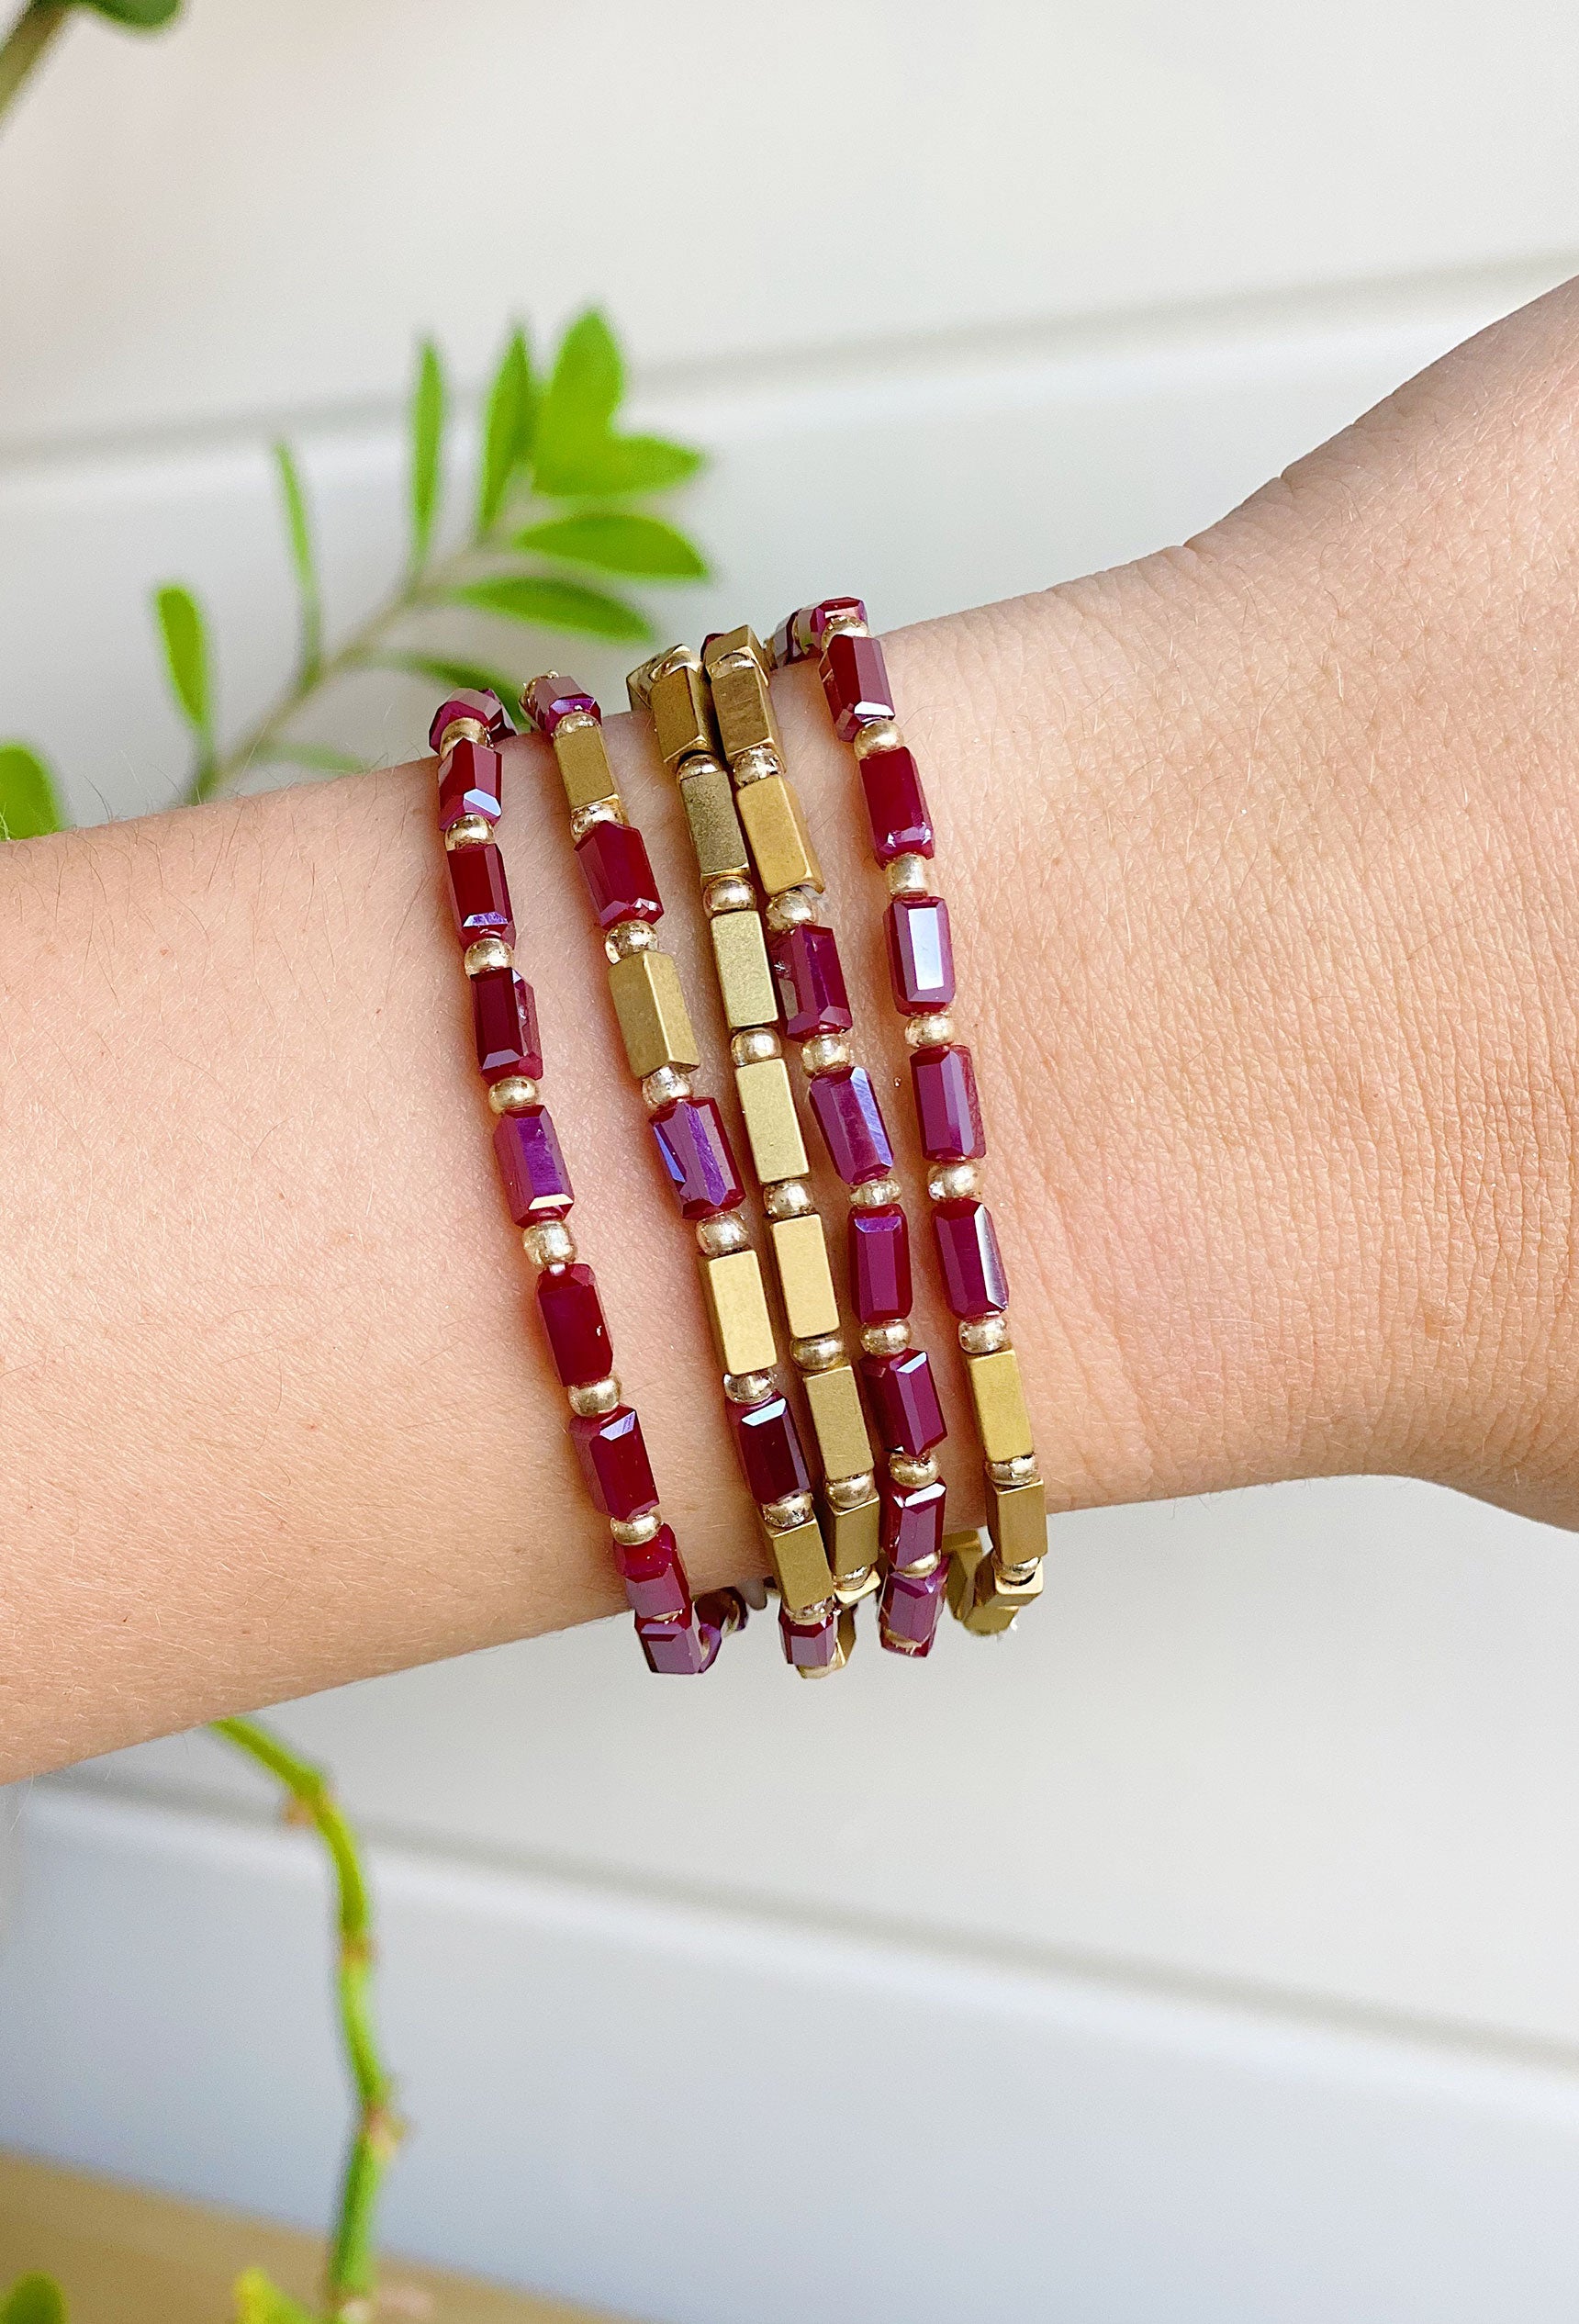 Daphne Beaded Bracelet Set in Burgundy, gold and burgundy beads, set of 5 pull on styling bracelets